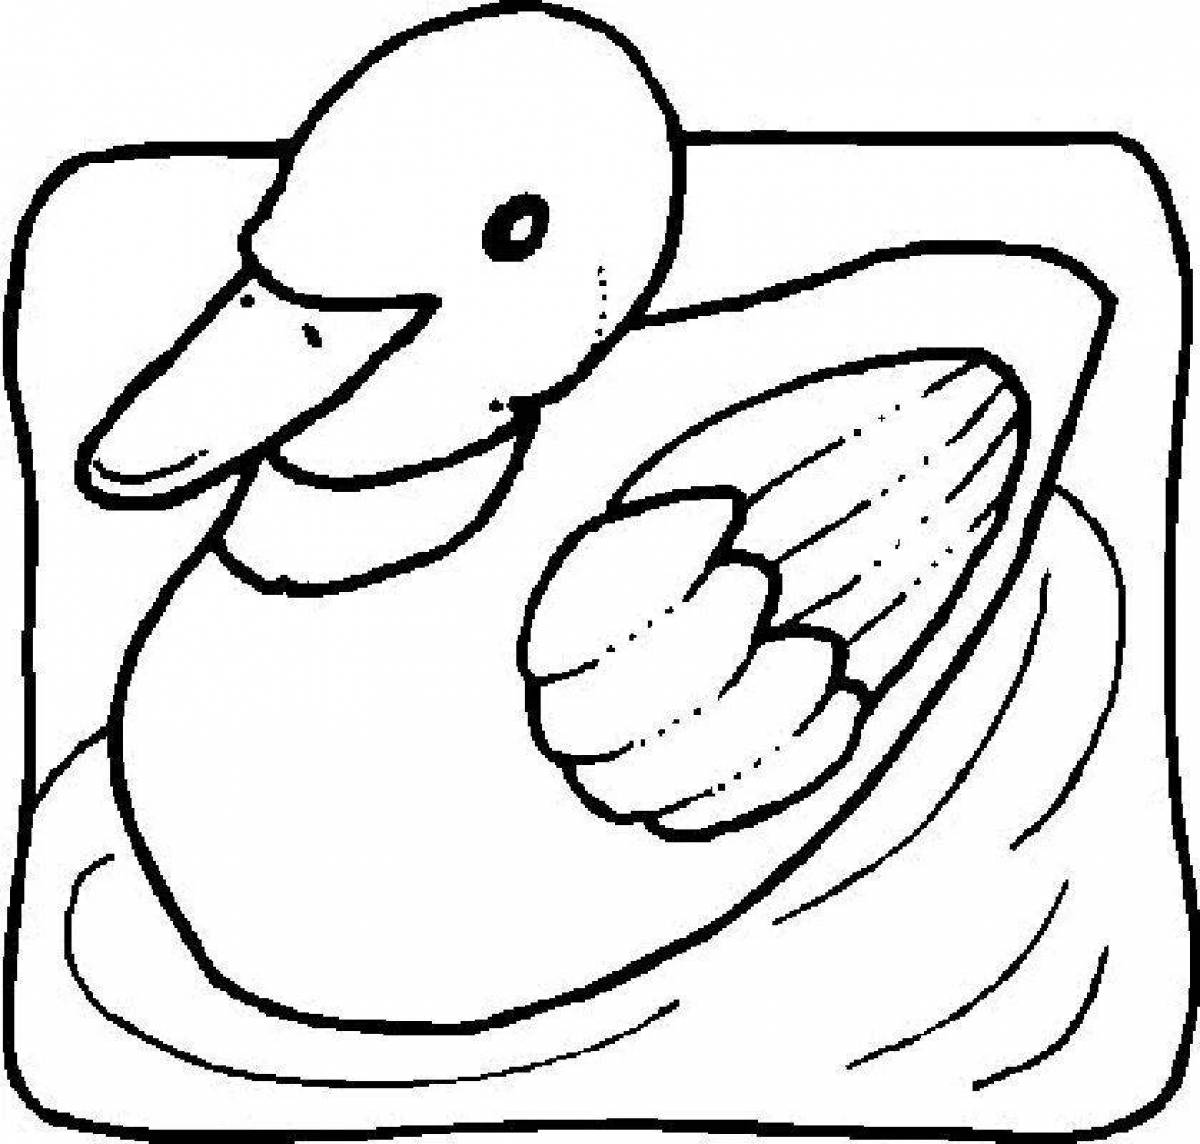 Lanfan funny duck coloring book